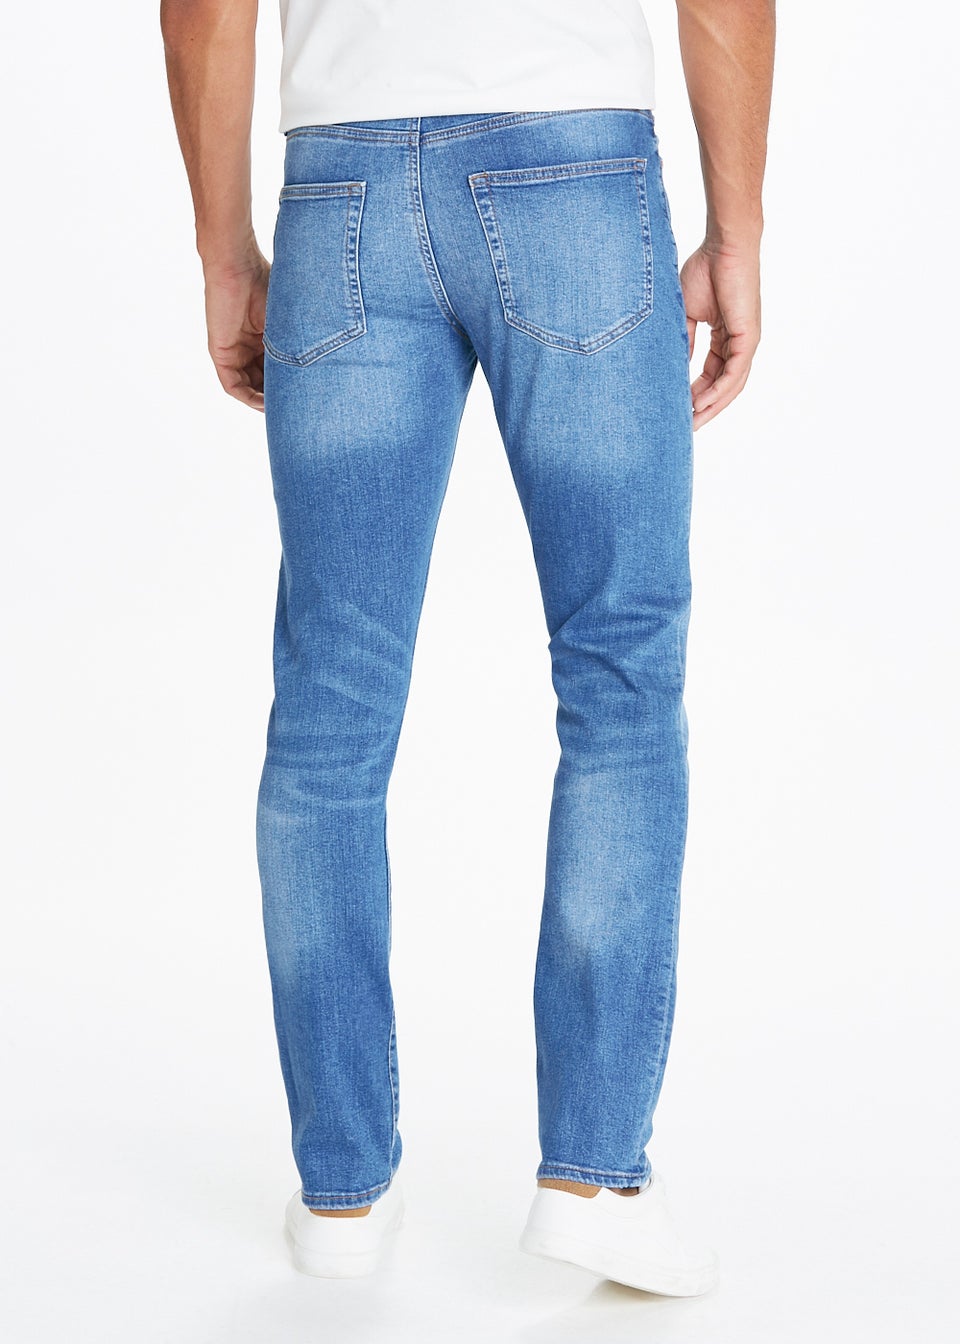 Kapadalay.com - Light Denim Jeans for Men